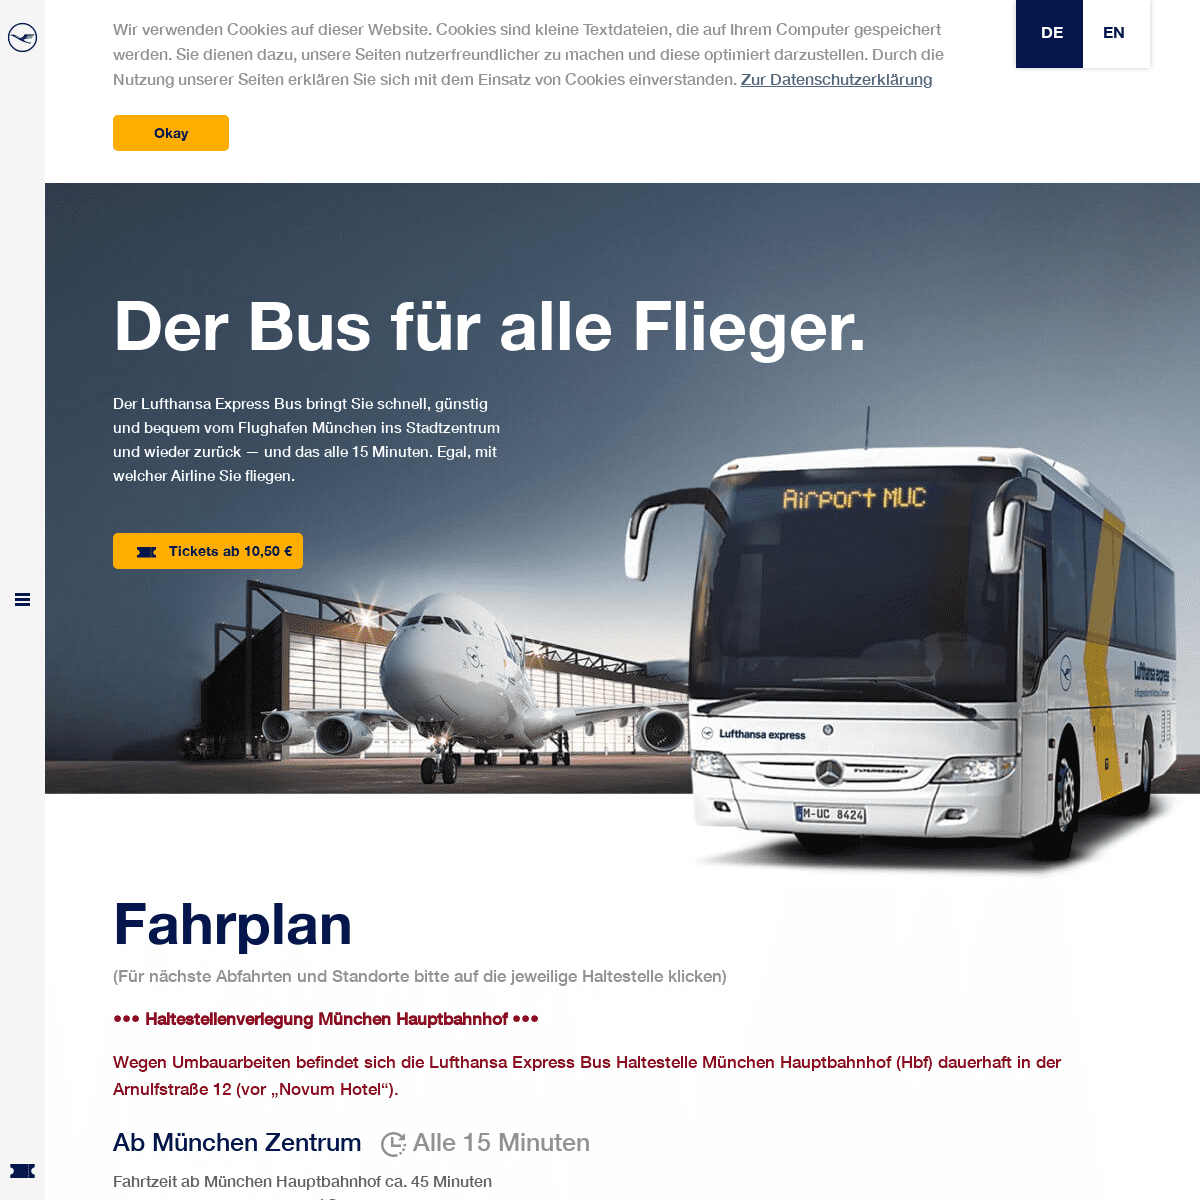 A complete backup of airportbus-muenchen.de